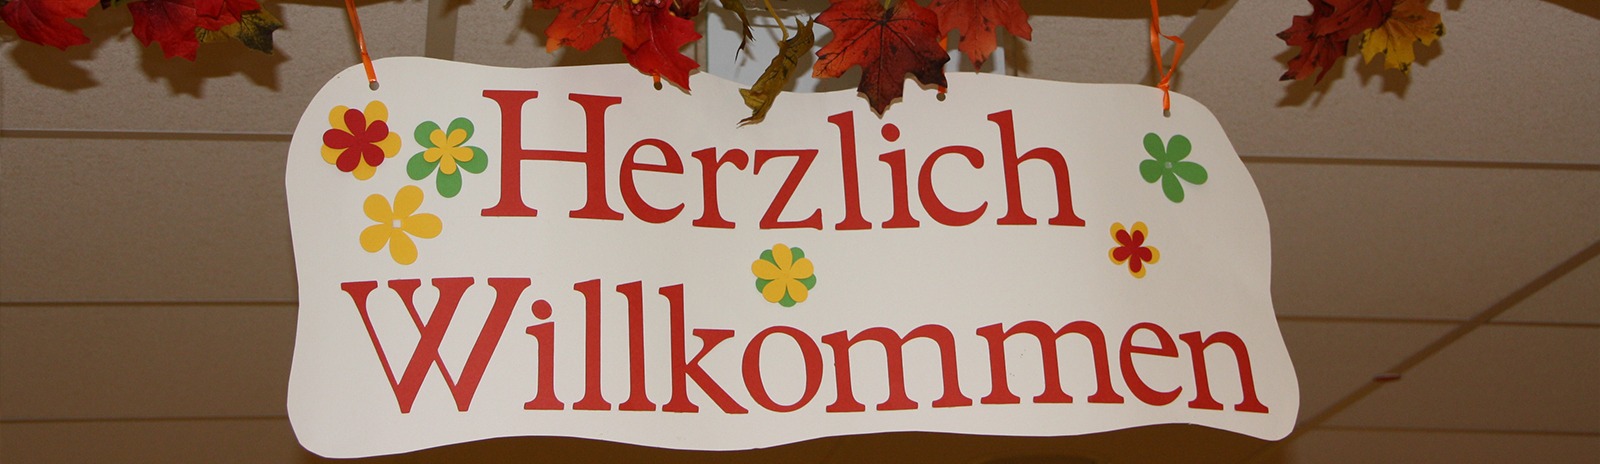 Eifelhaus_Oktoberfest_slider